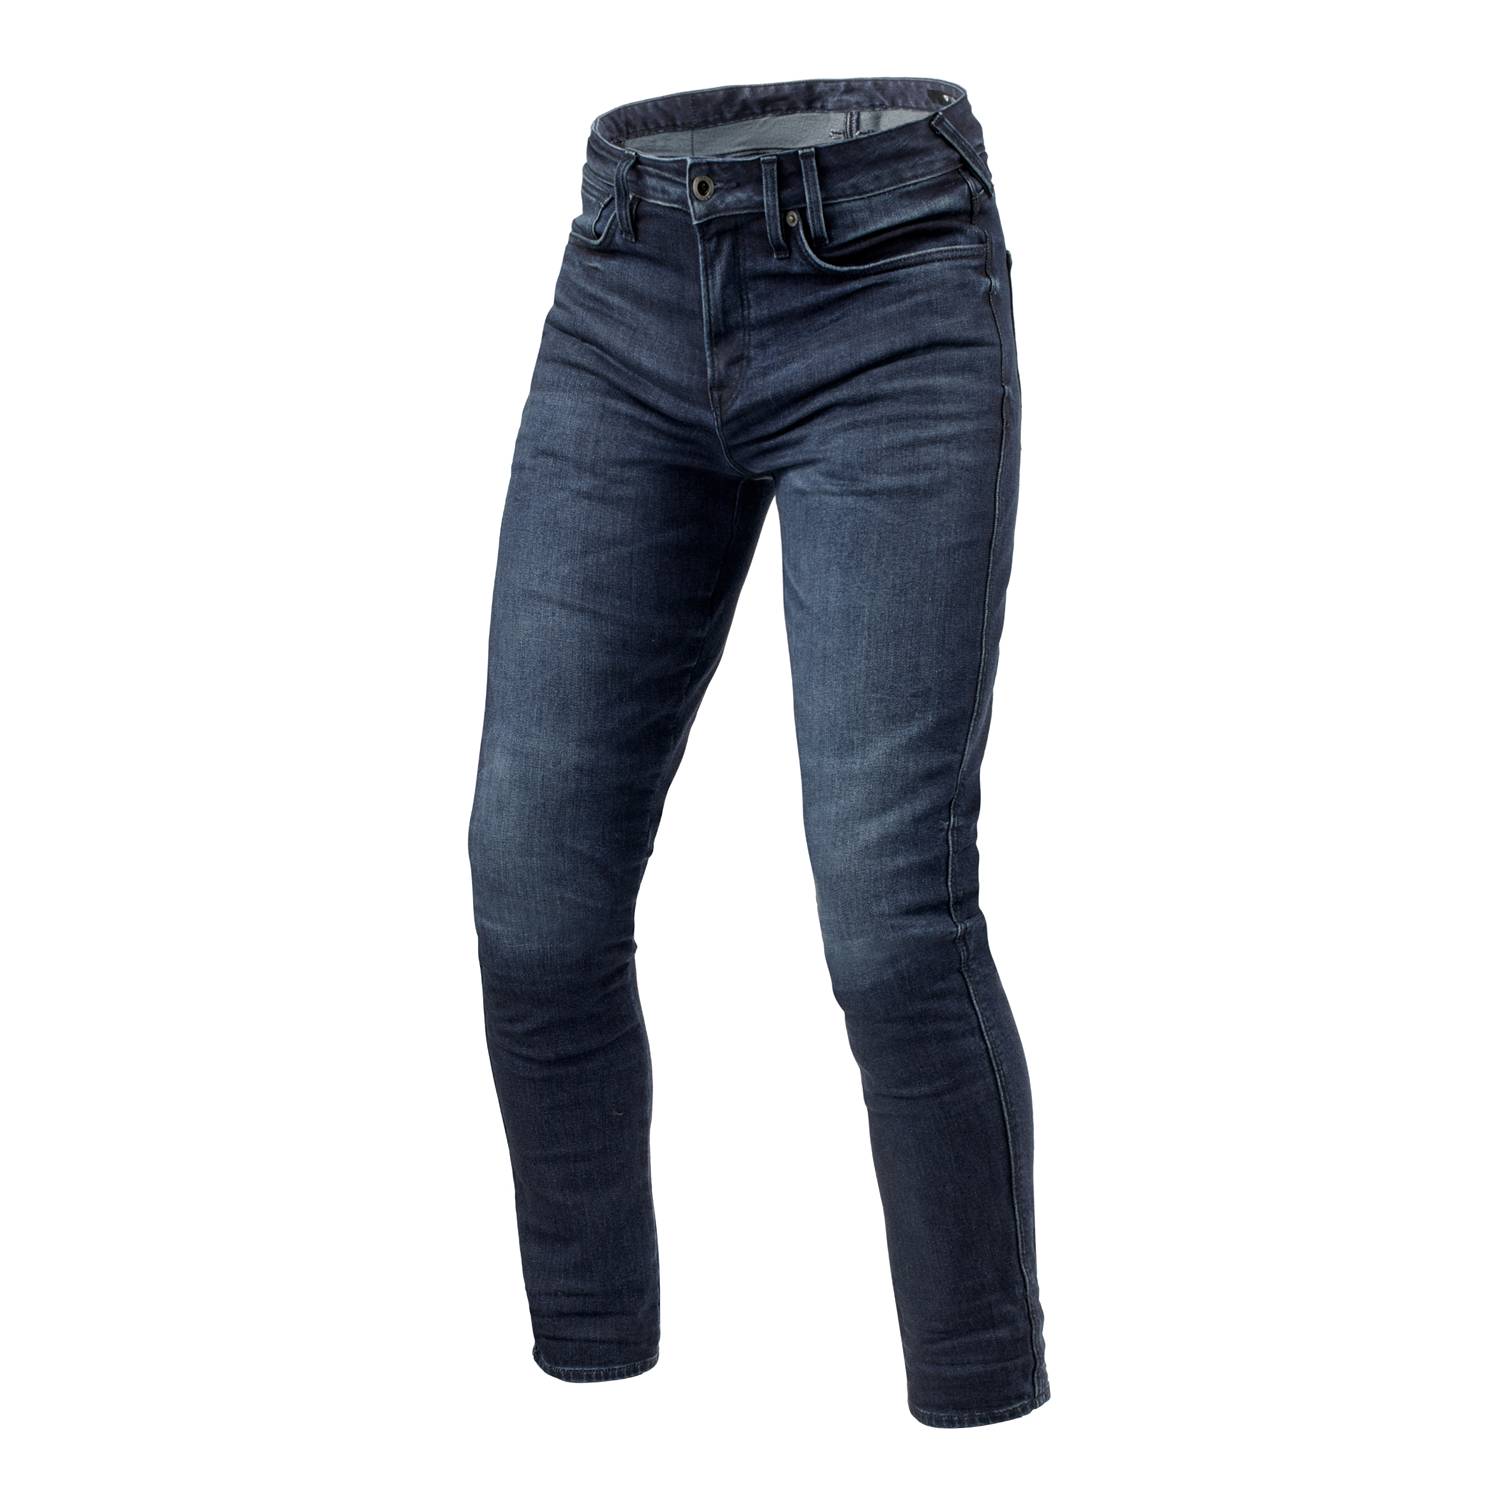 Image of REV'IT! Jeans Carlin SK Dark Blue Used L34 Motorcycle Jeans Talla L34/W33